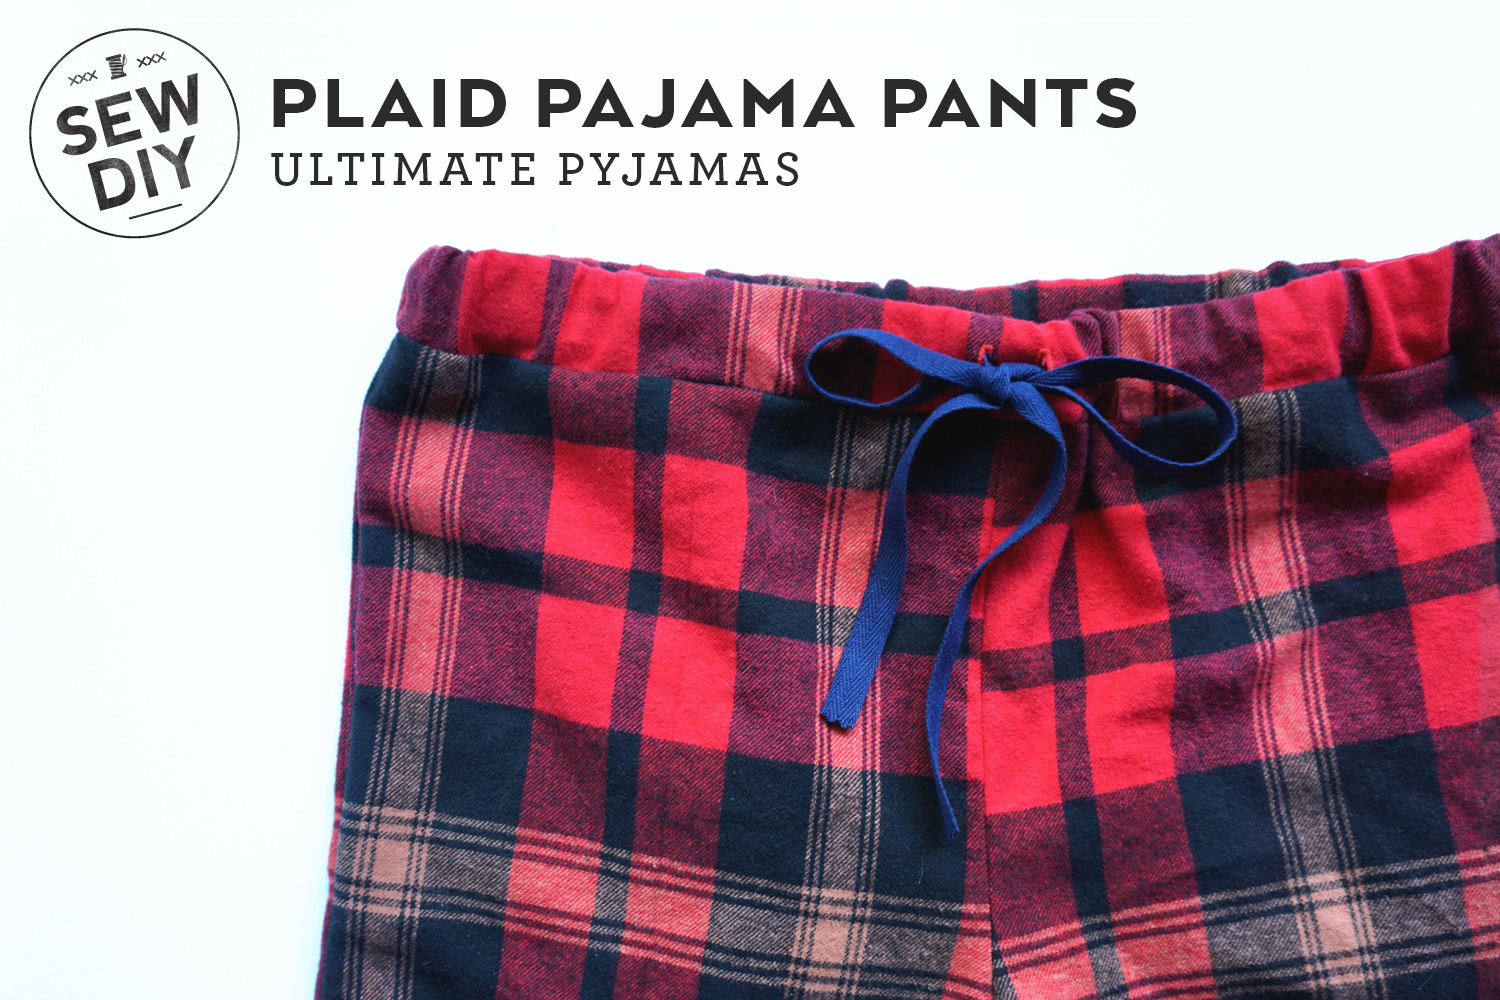 DIY Easy Knit Pajama Pants